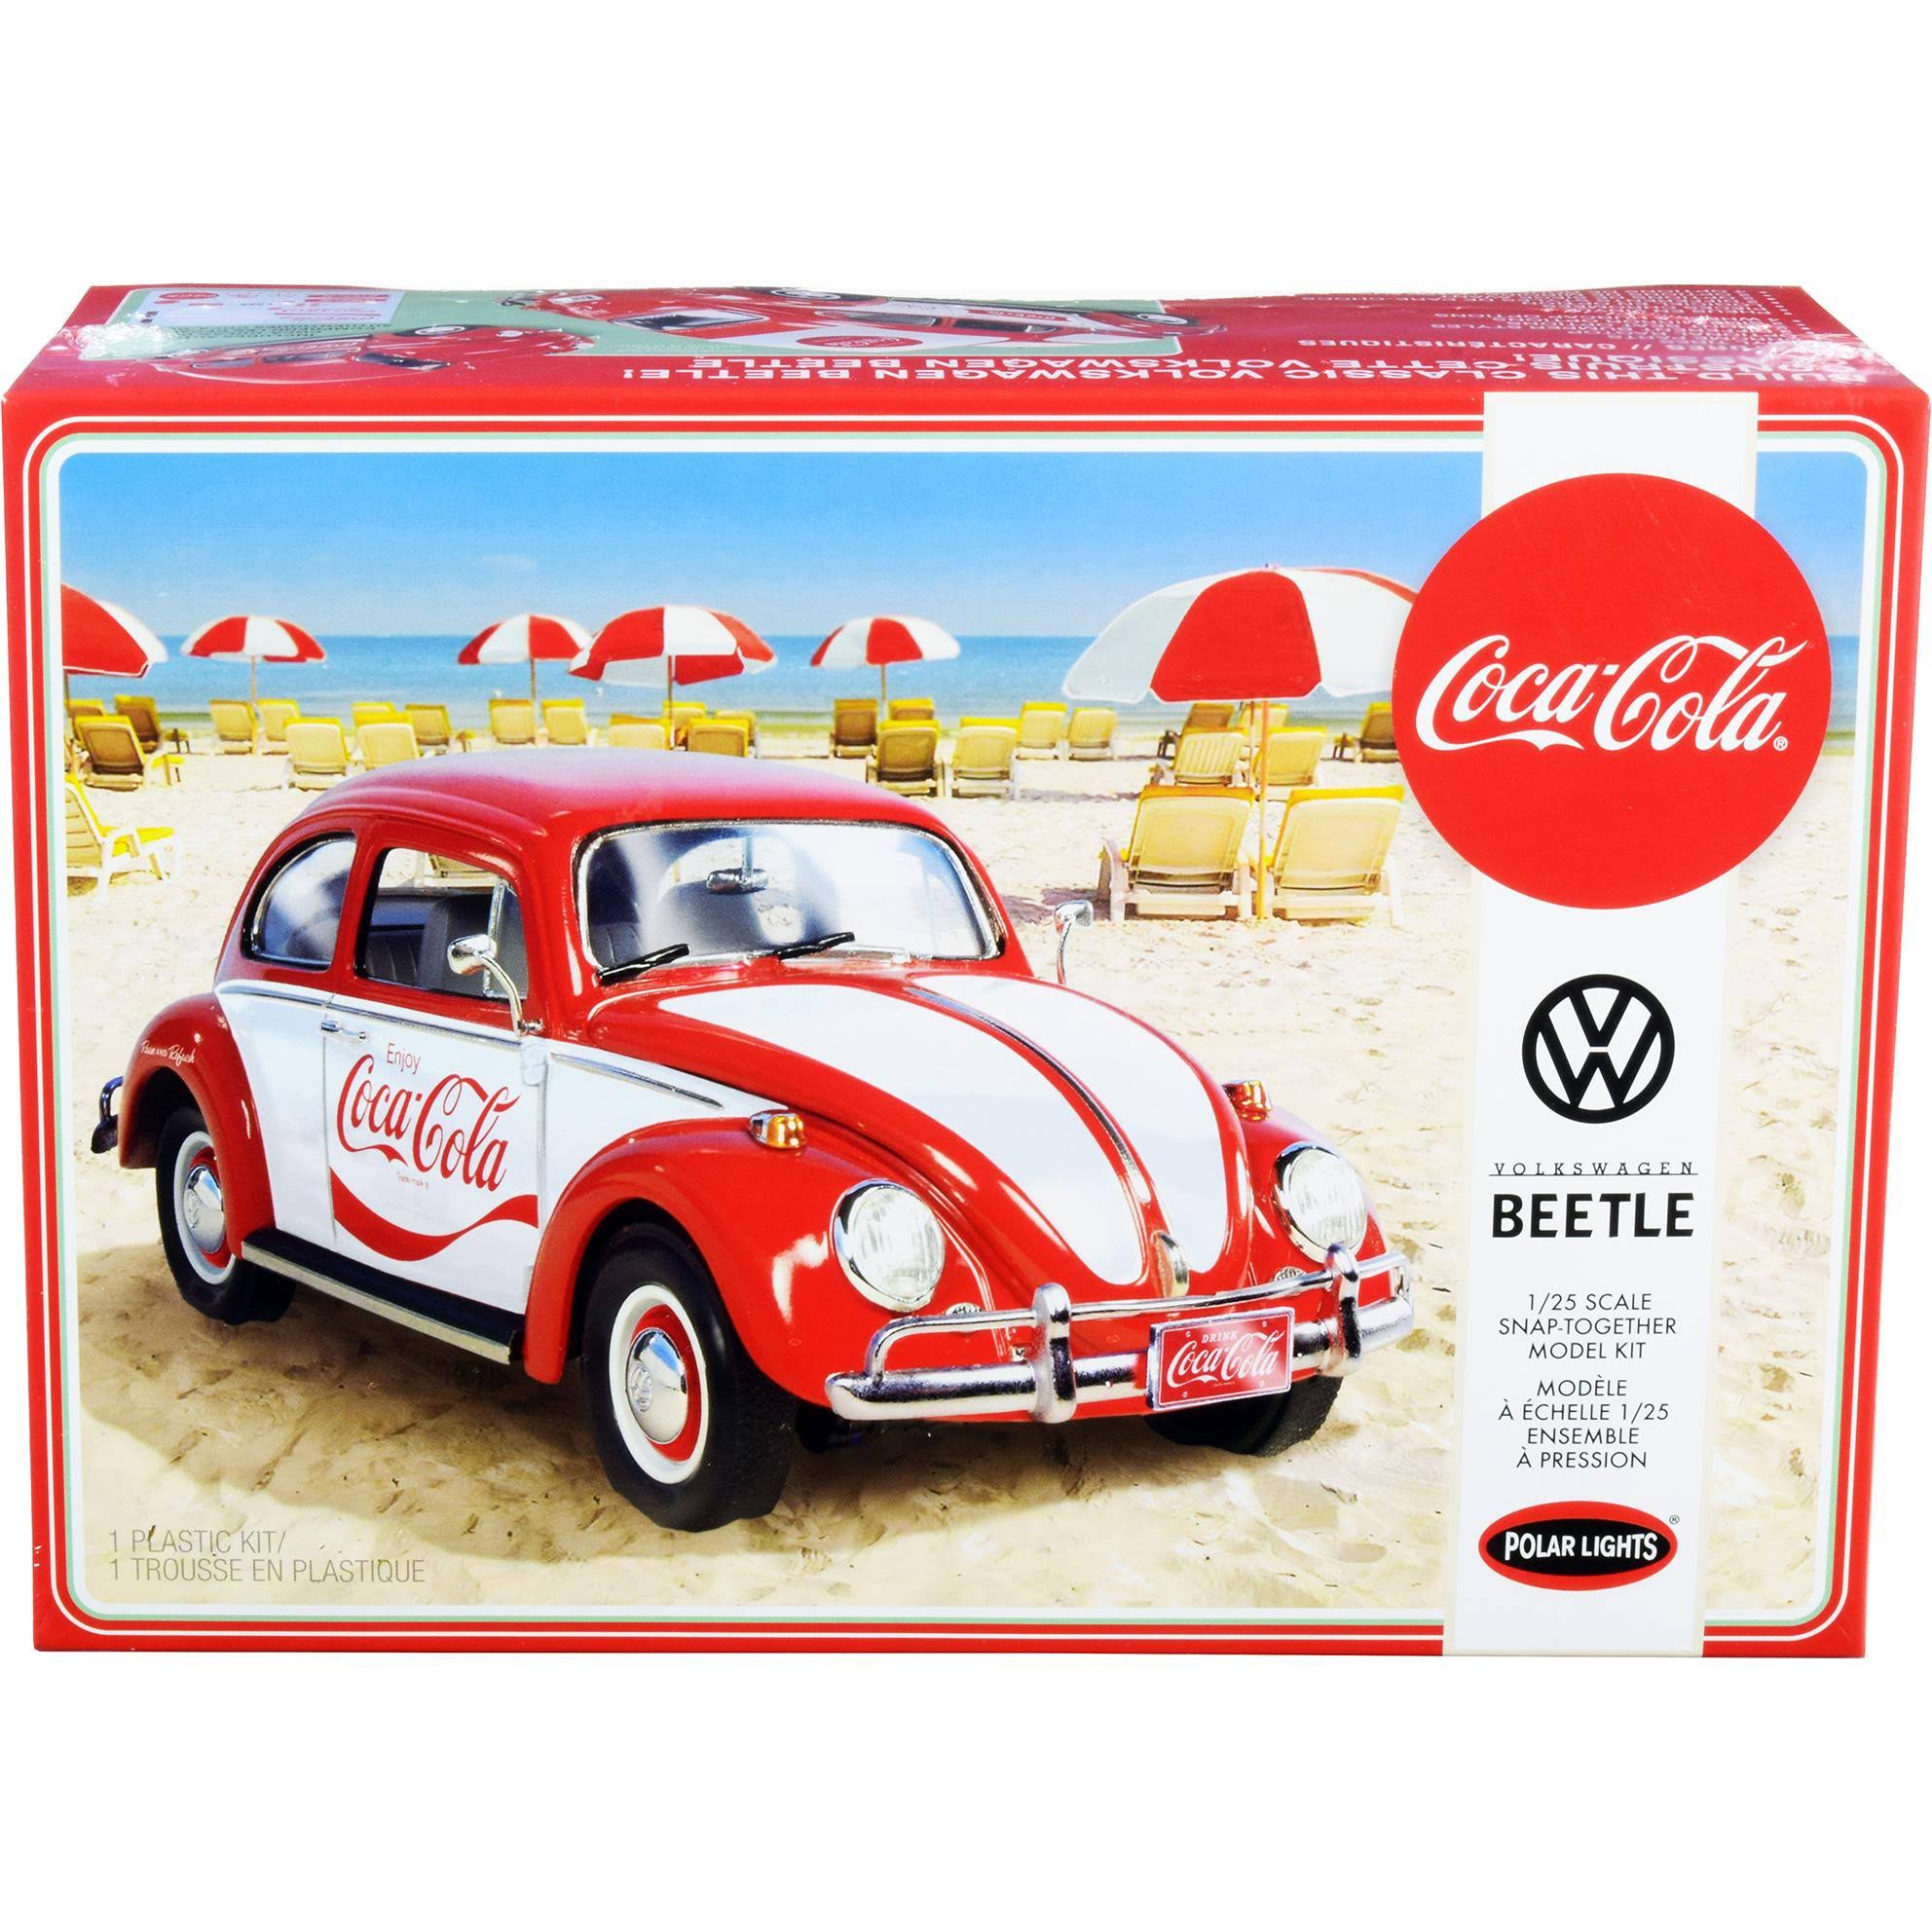 Polar Lights Volkswagen Beetle Coca-Cola Plastic Model Kit - 1/24 Scale